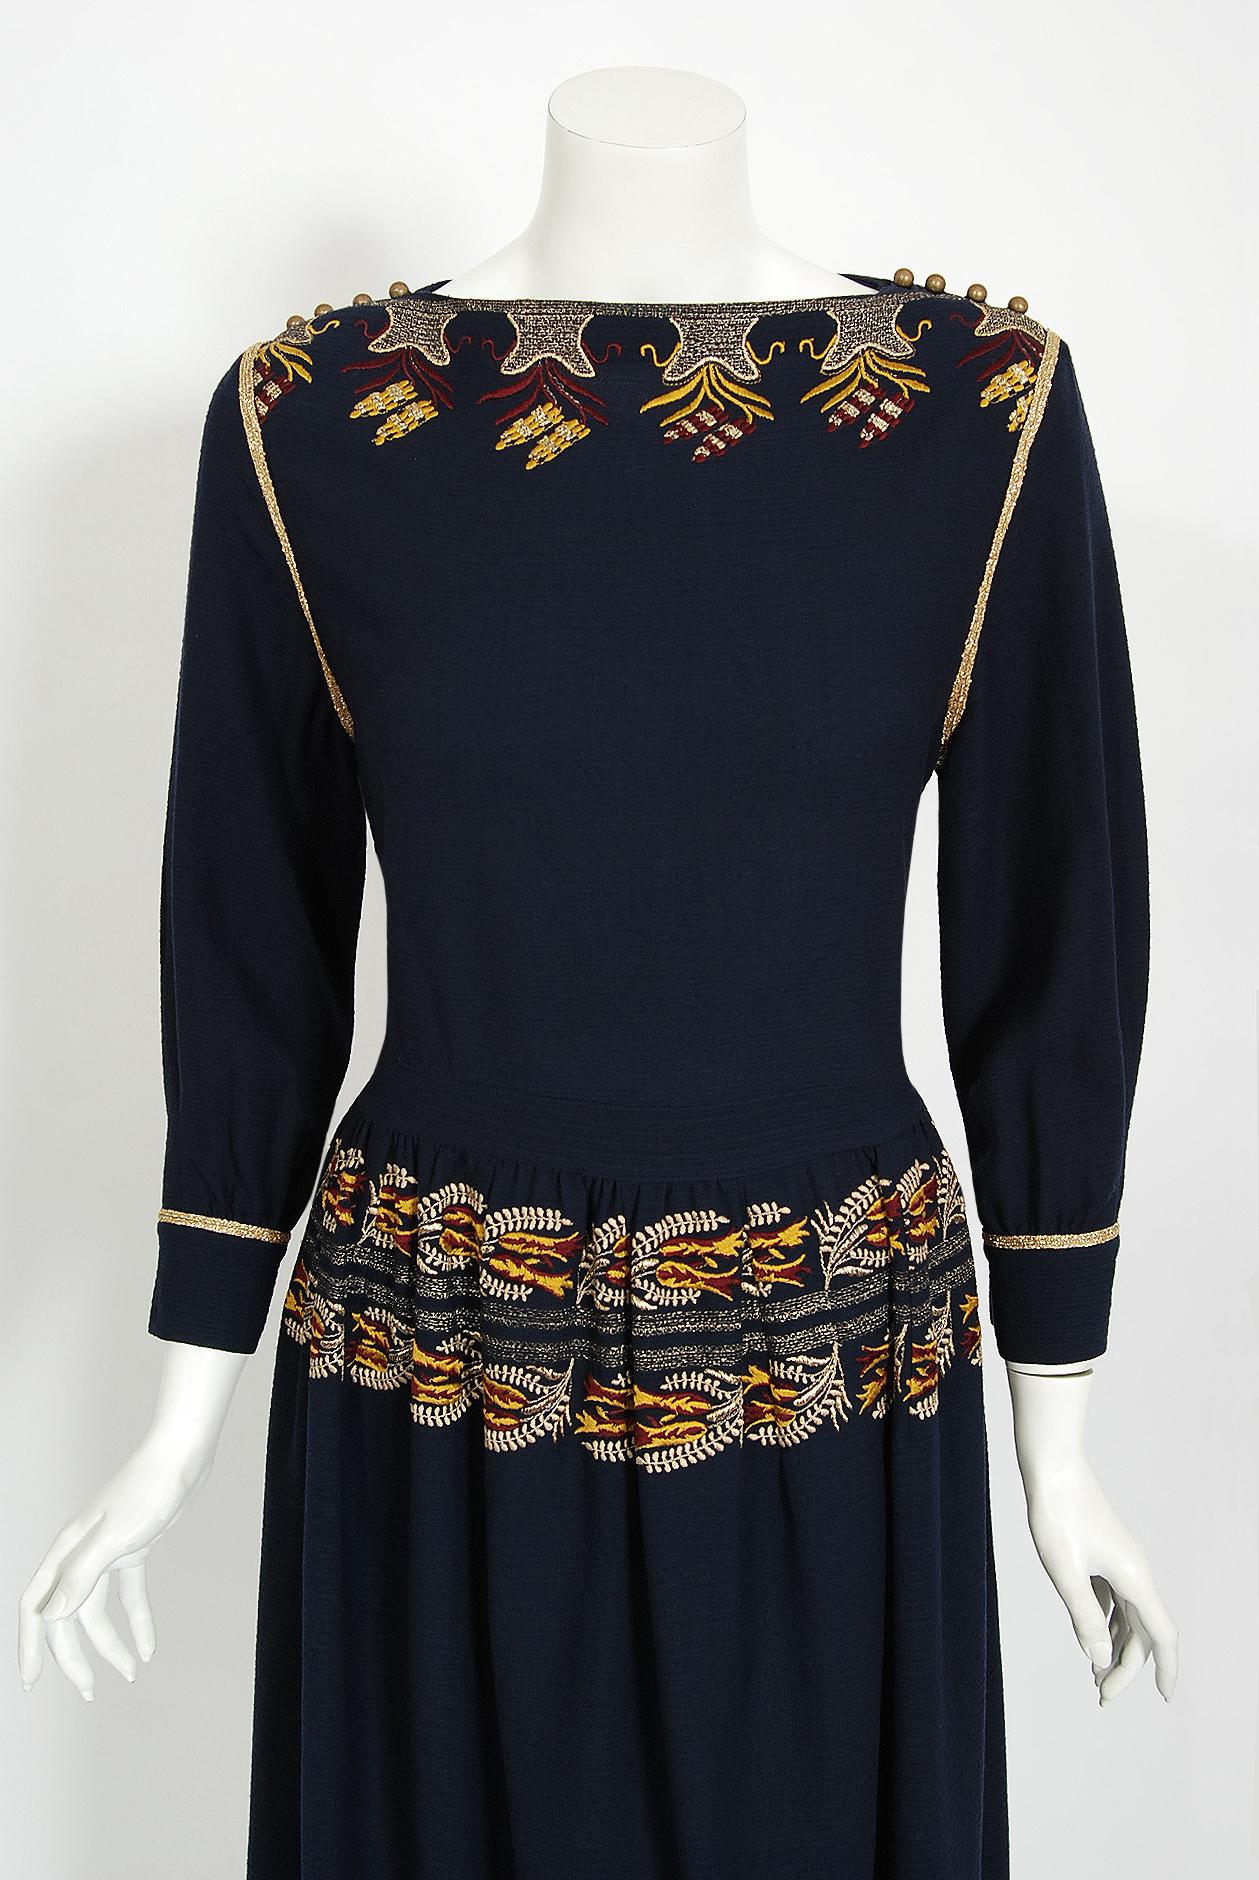 Black Vintage 1979 Karl Lagerfeld for Chloe Navy Blue Metallic Embroidered Knit Dress